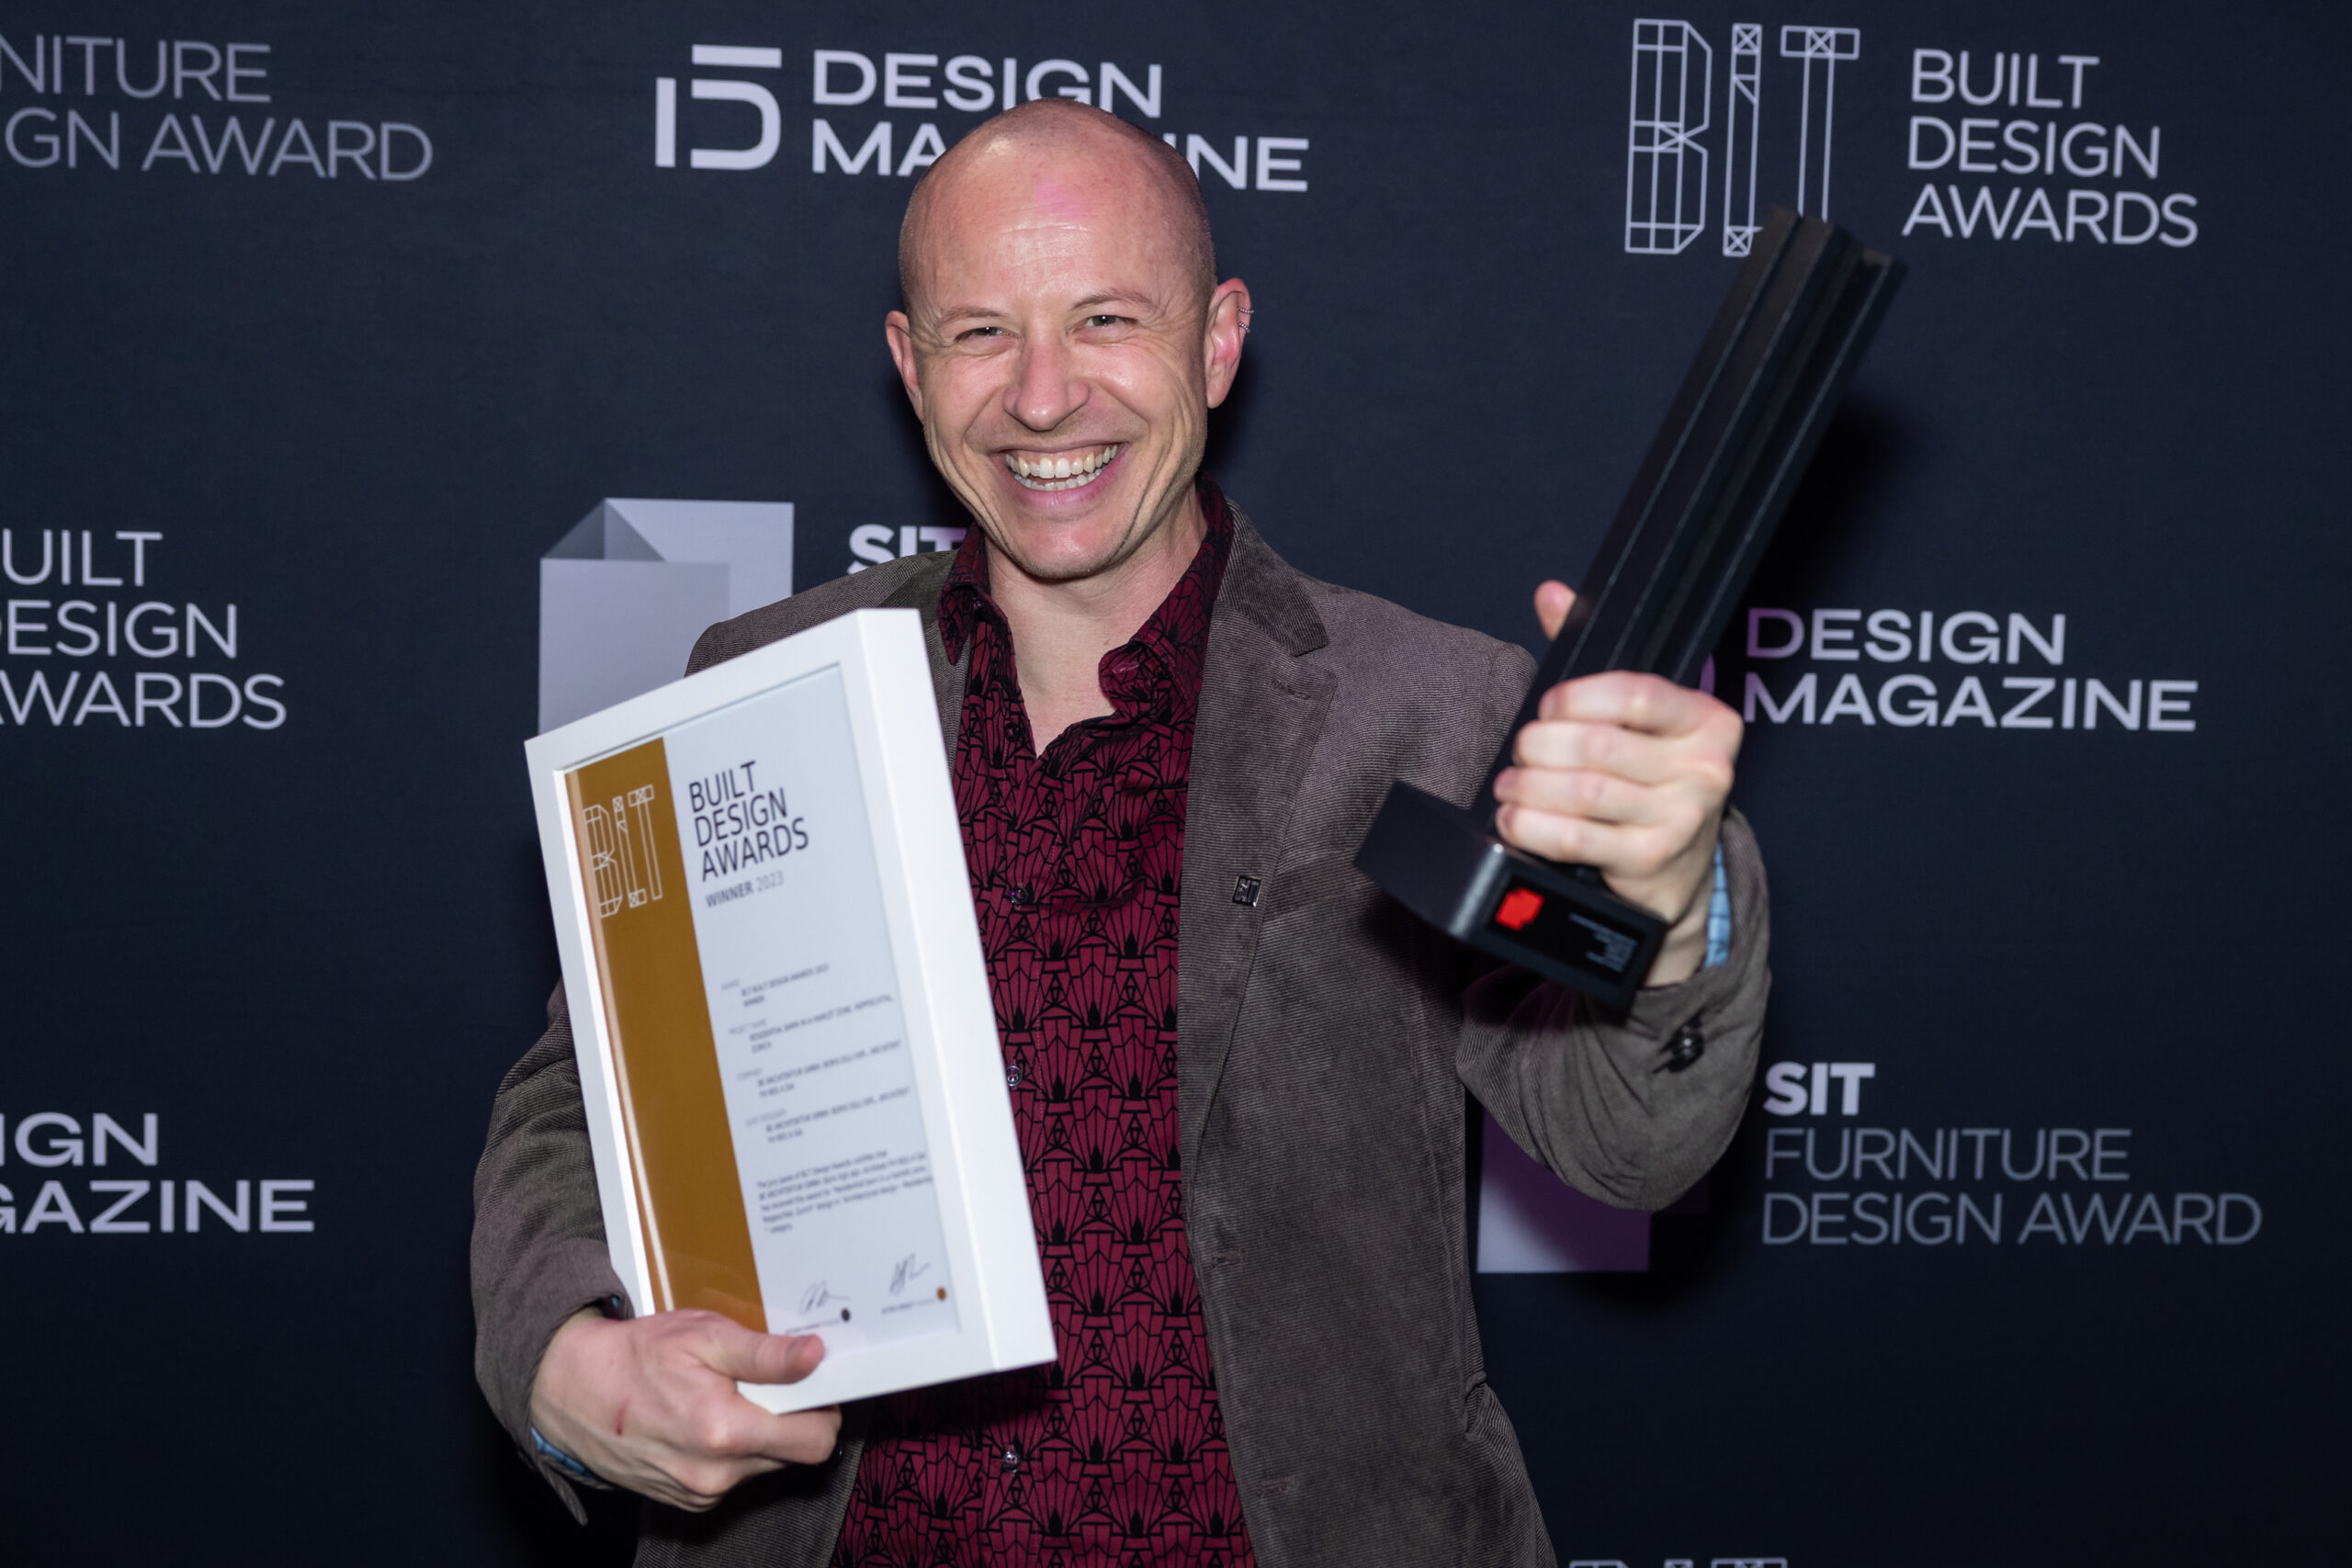 BLT Built Design Awards Gala at the KKL Luzern in Switzerland